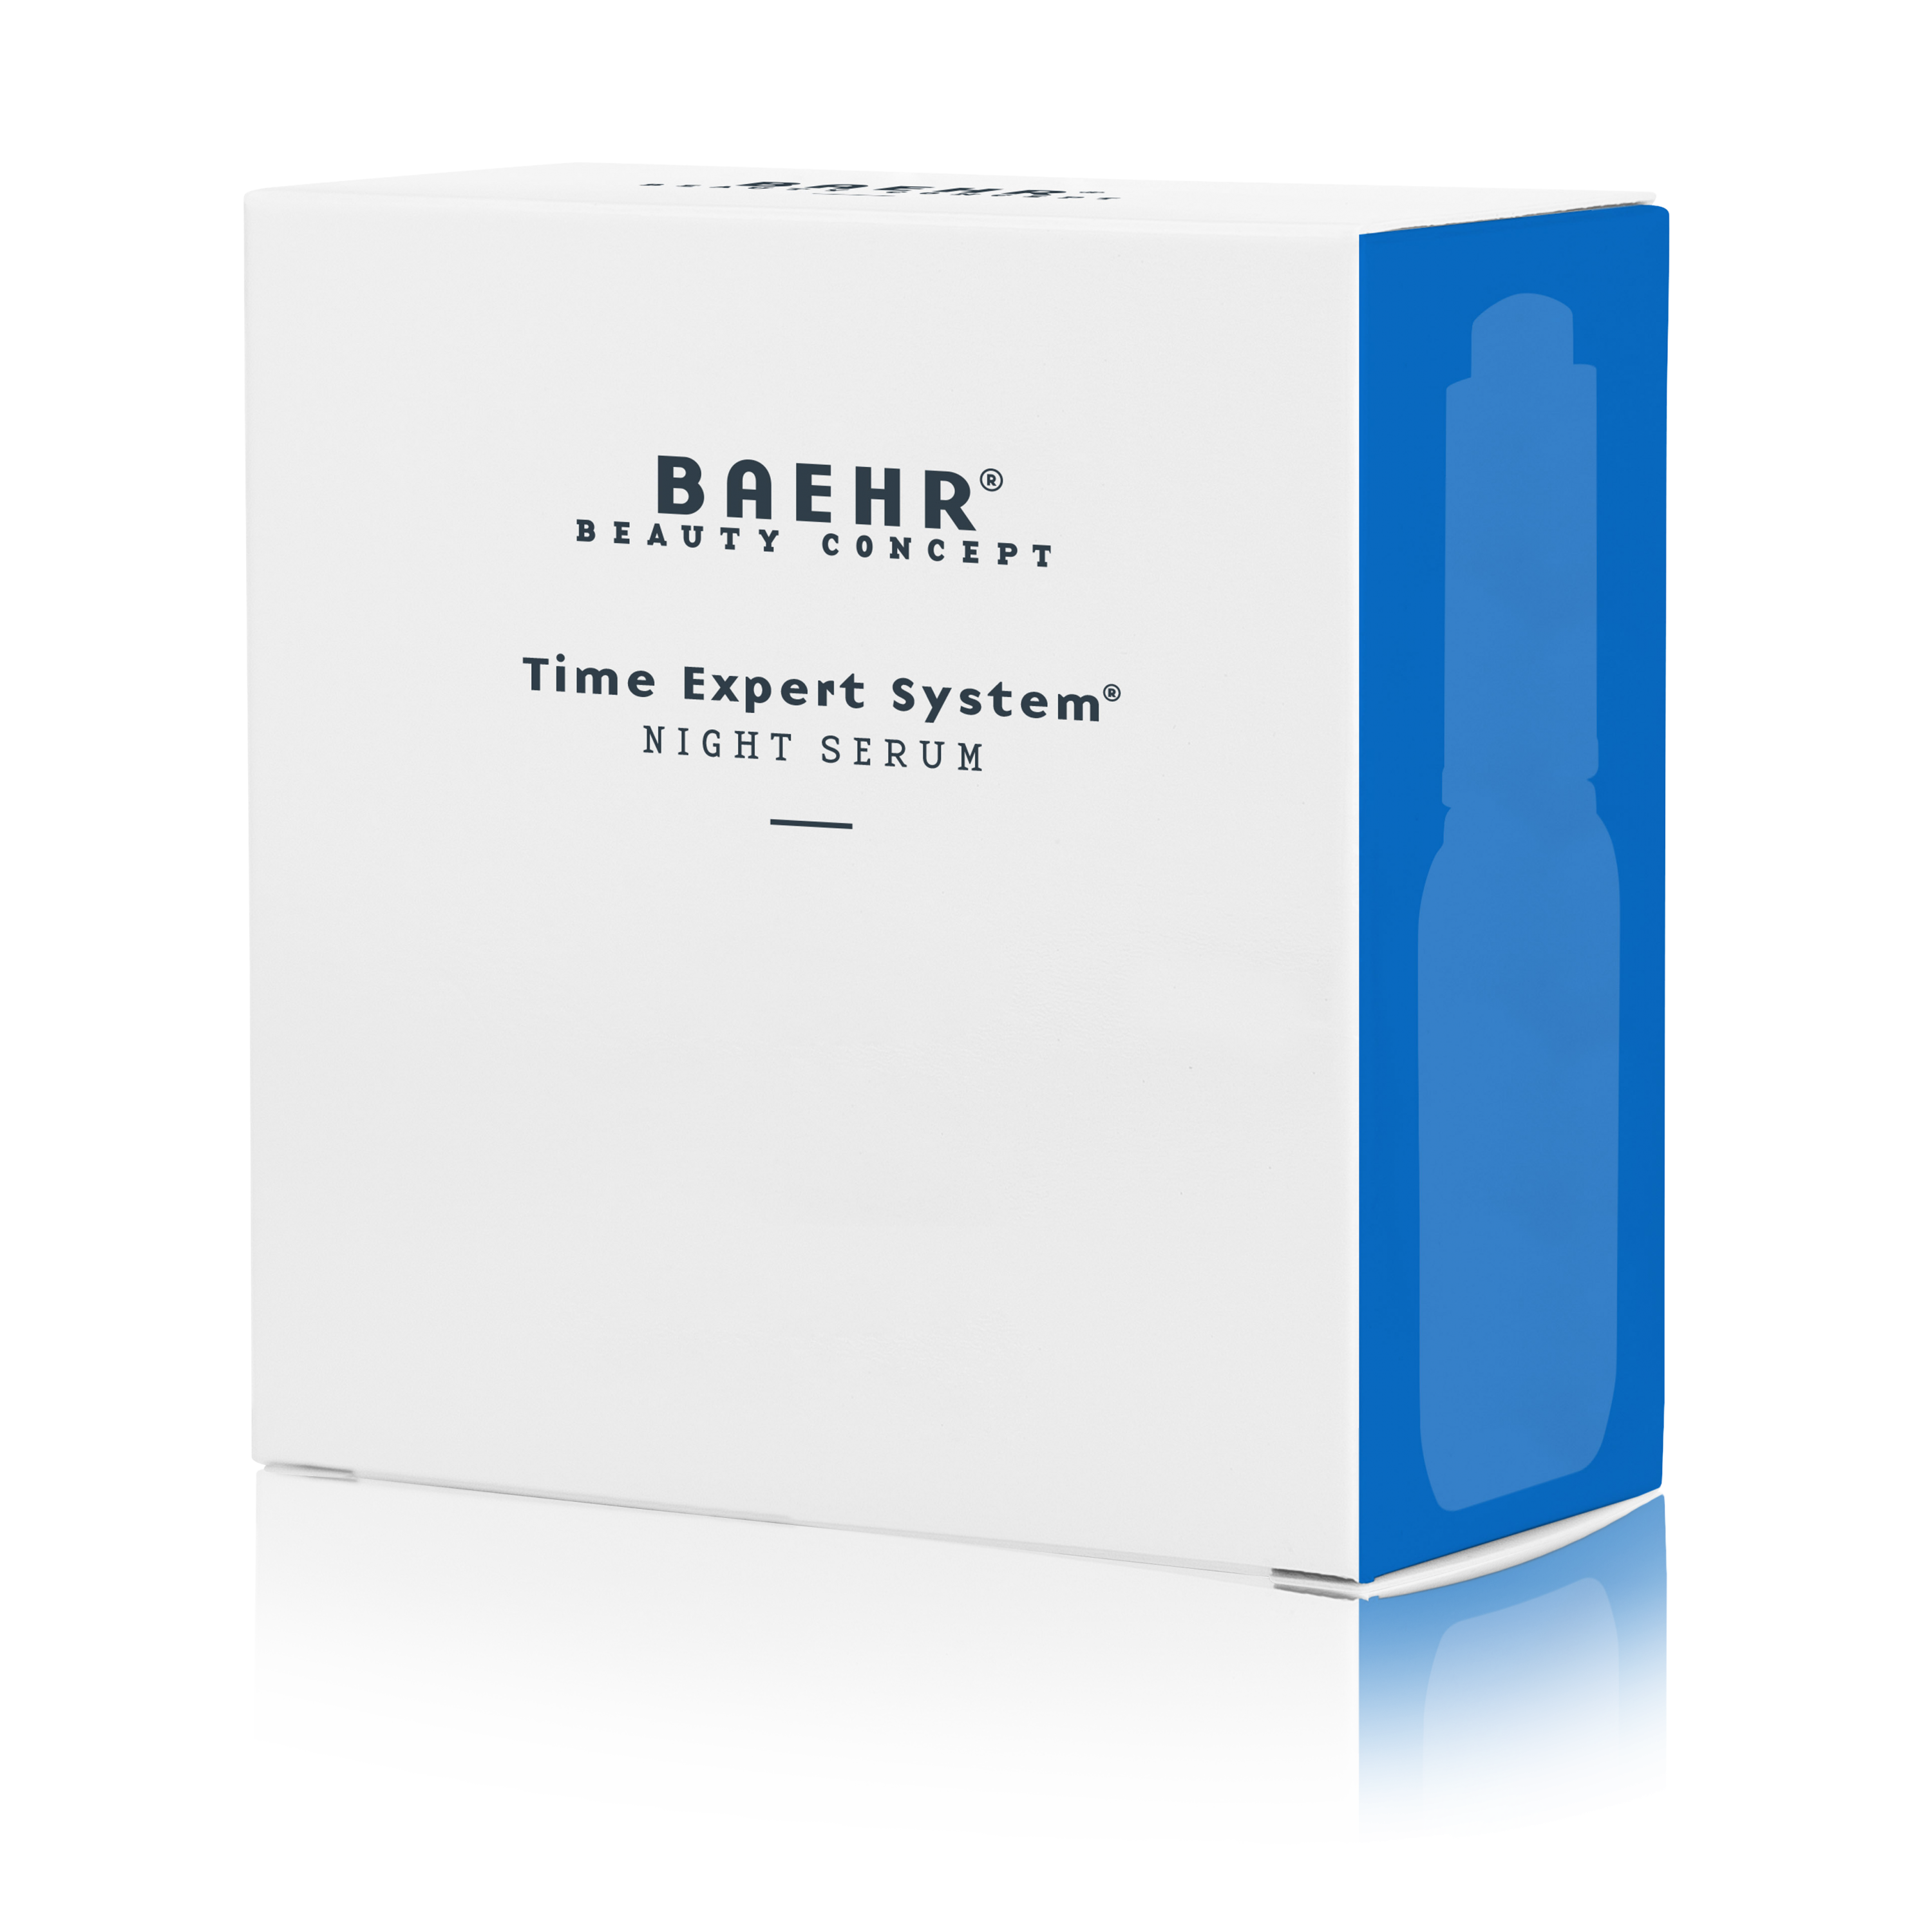 BAEHR BEAUTY CONCEPT Time Expert System - Night Serum 15 ml